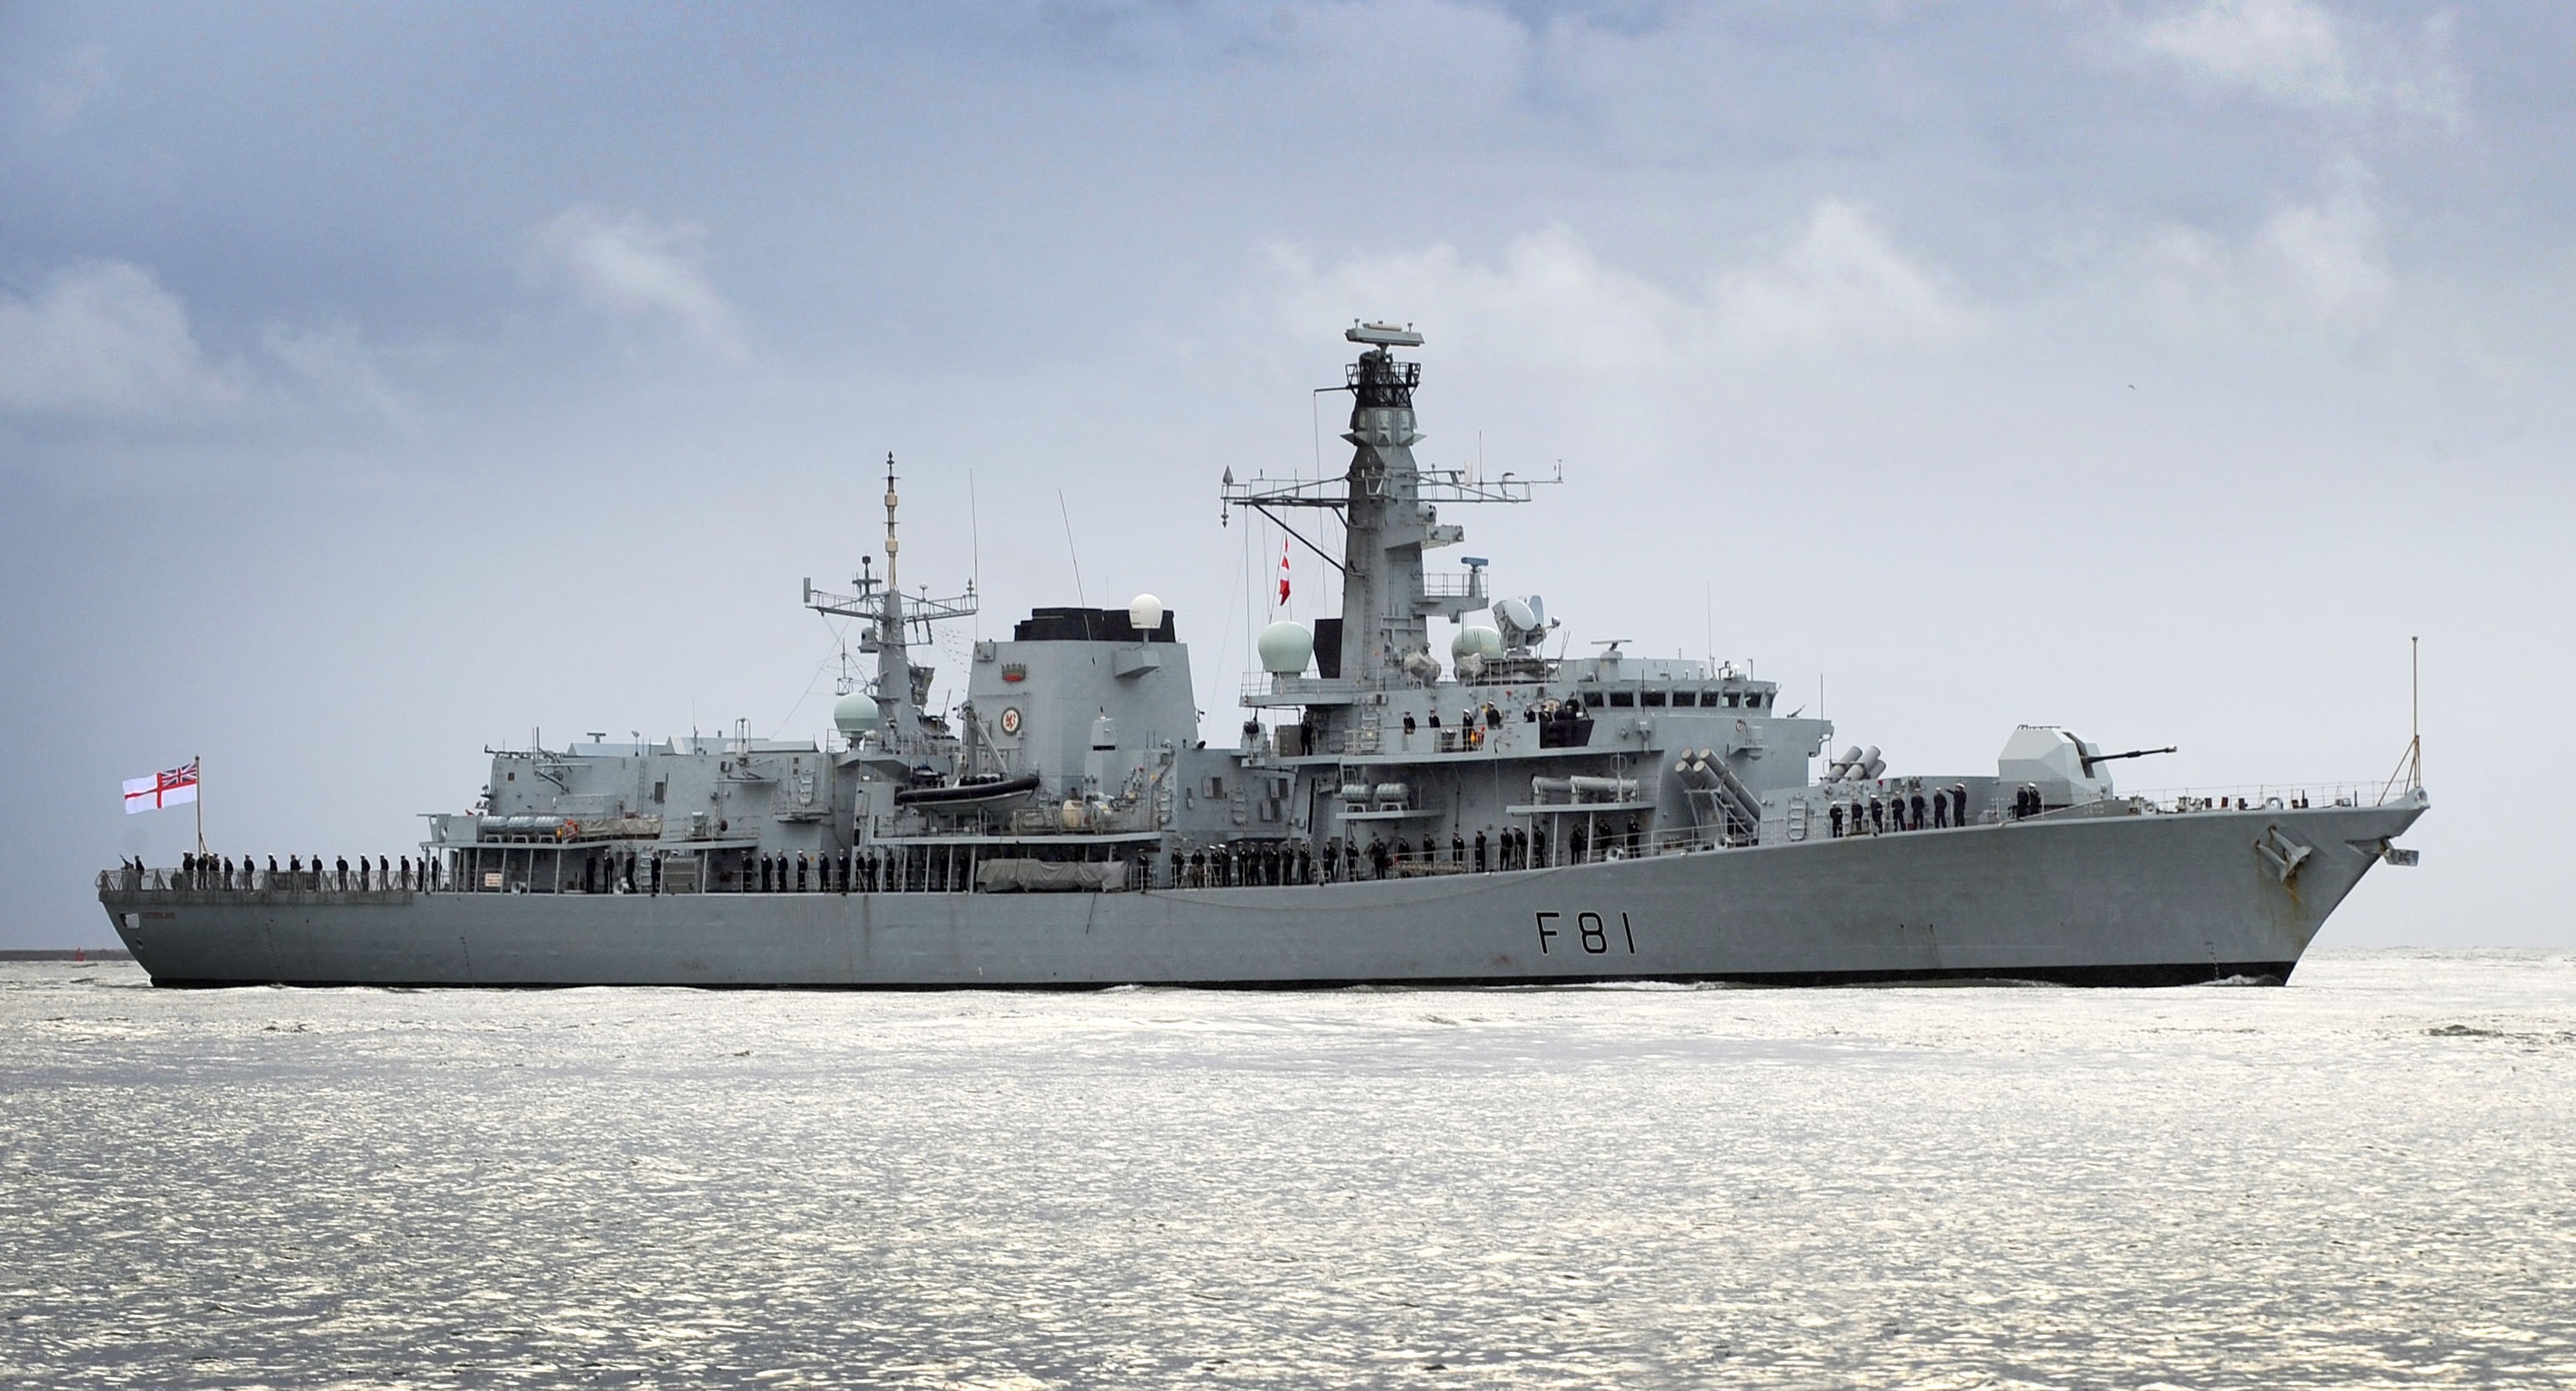 HMS_Sutherland_(F81)_MoD.jpg